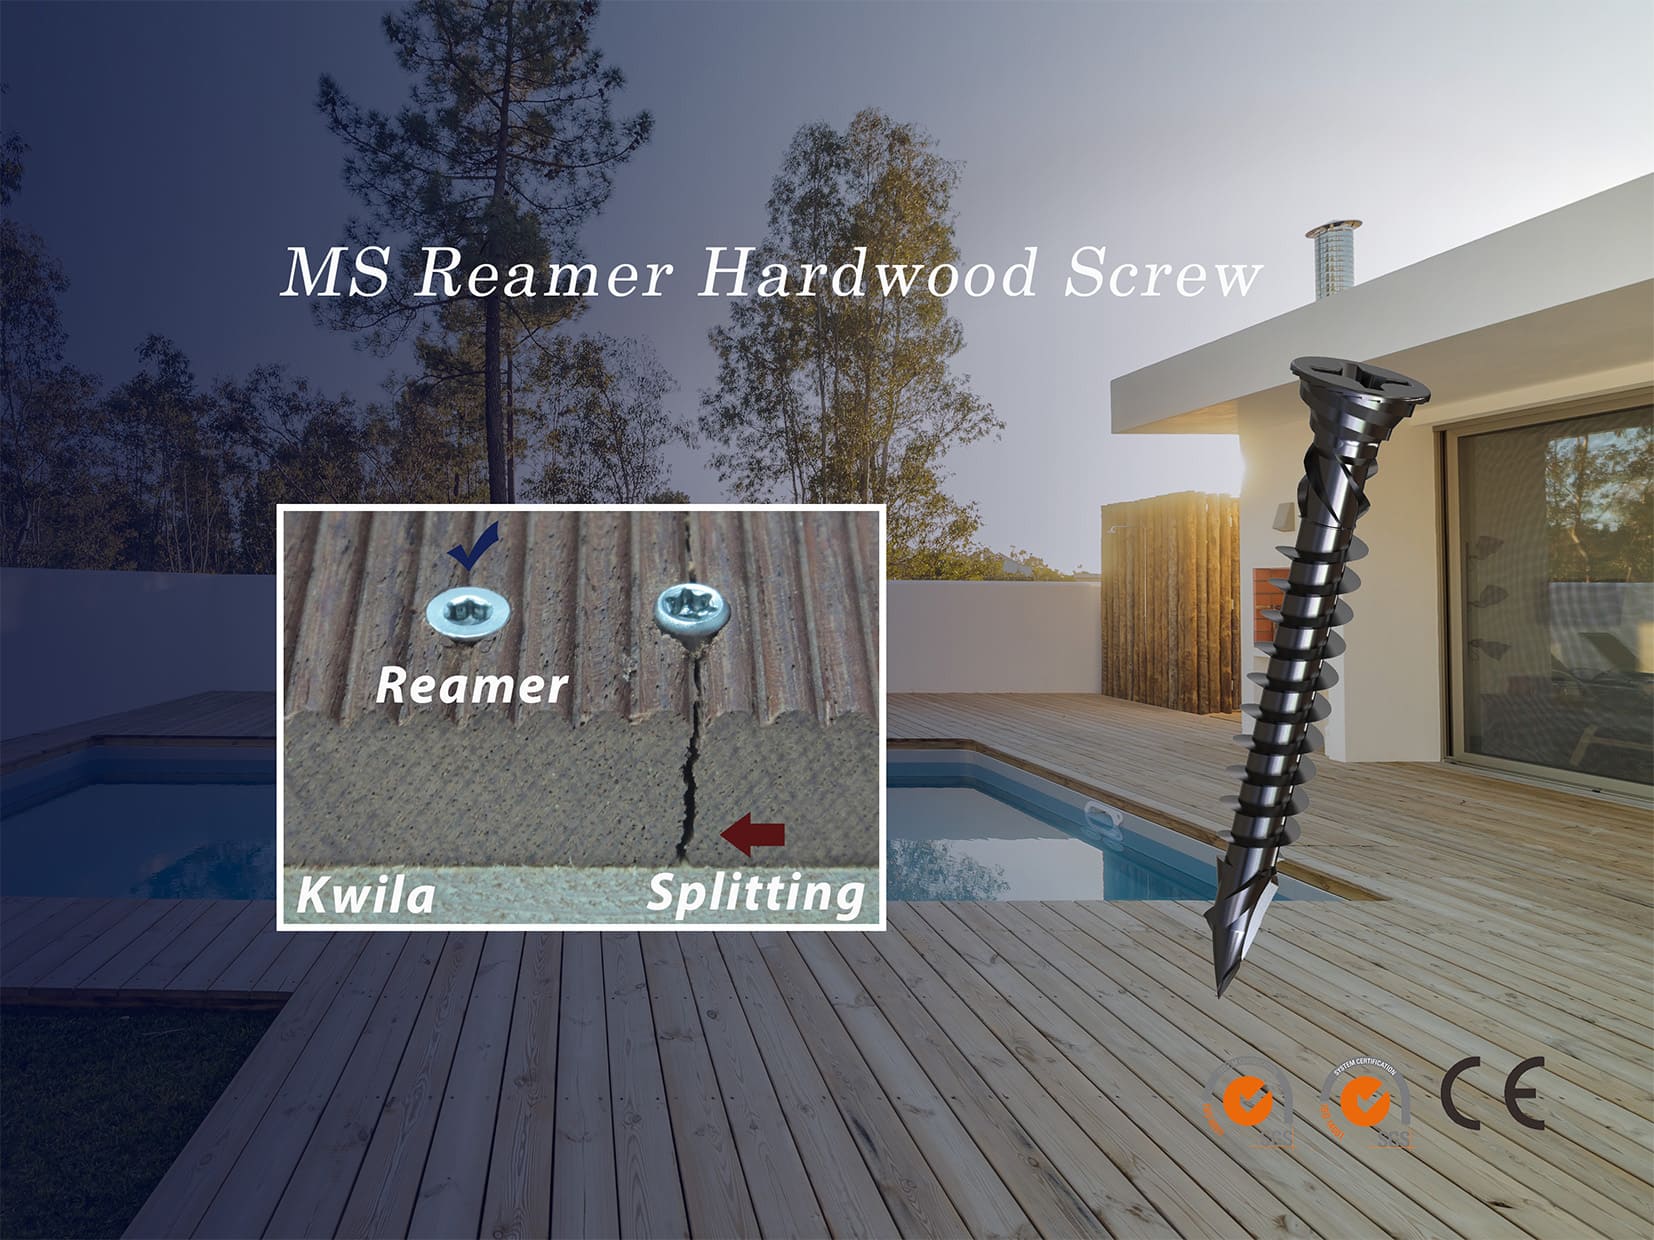 MS Reamer Hardwood Screw